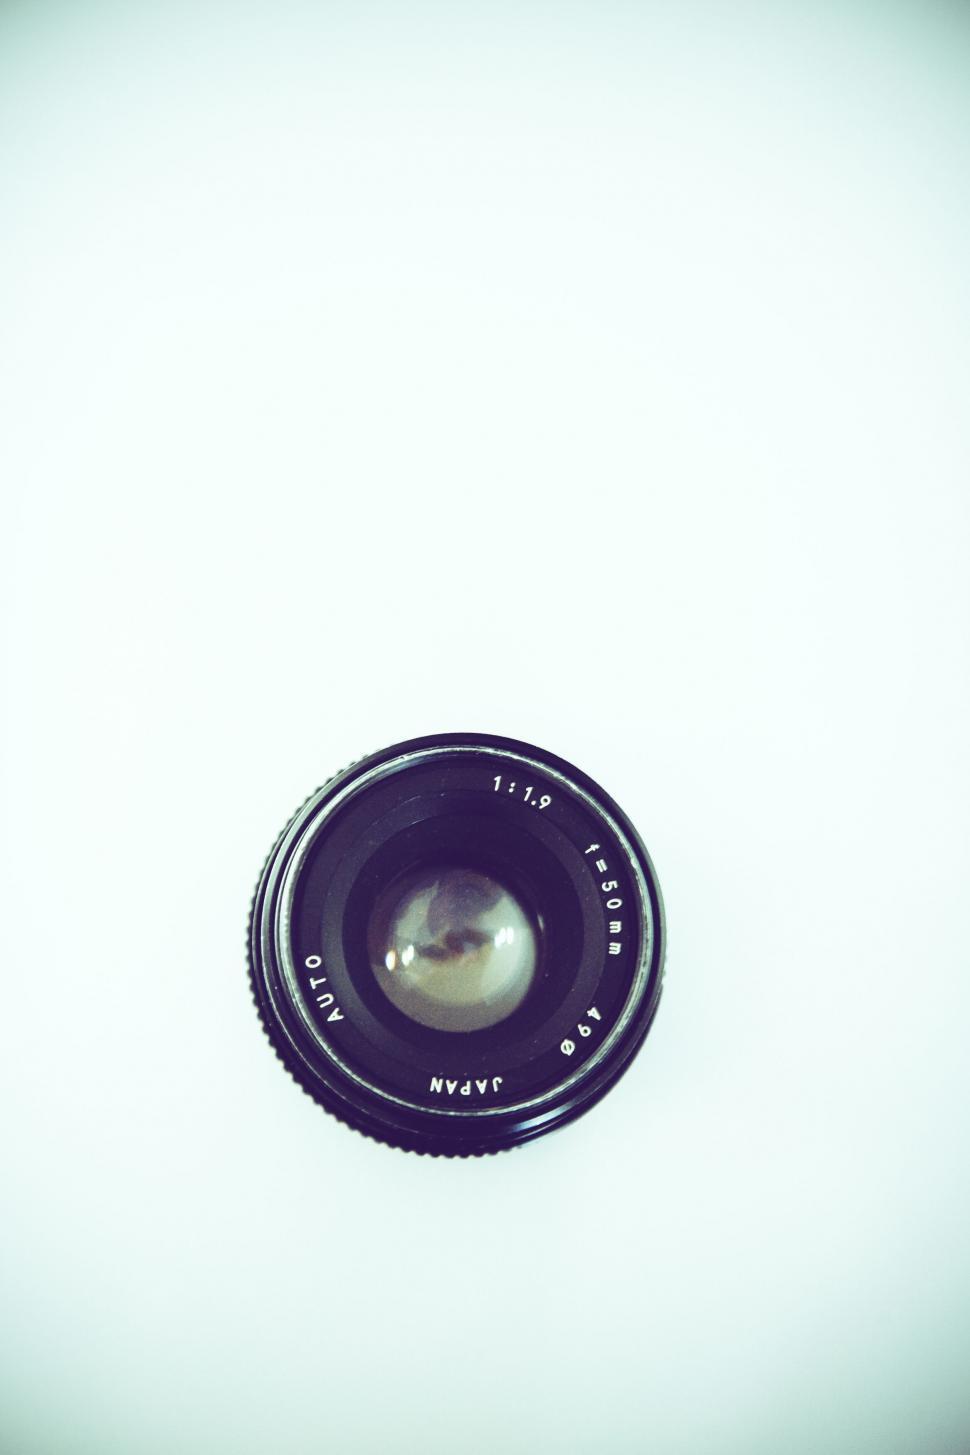 Free Image of Vintage camera lens on simple background 